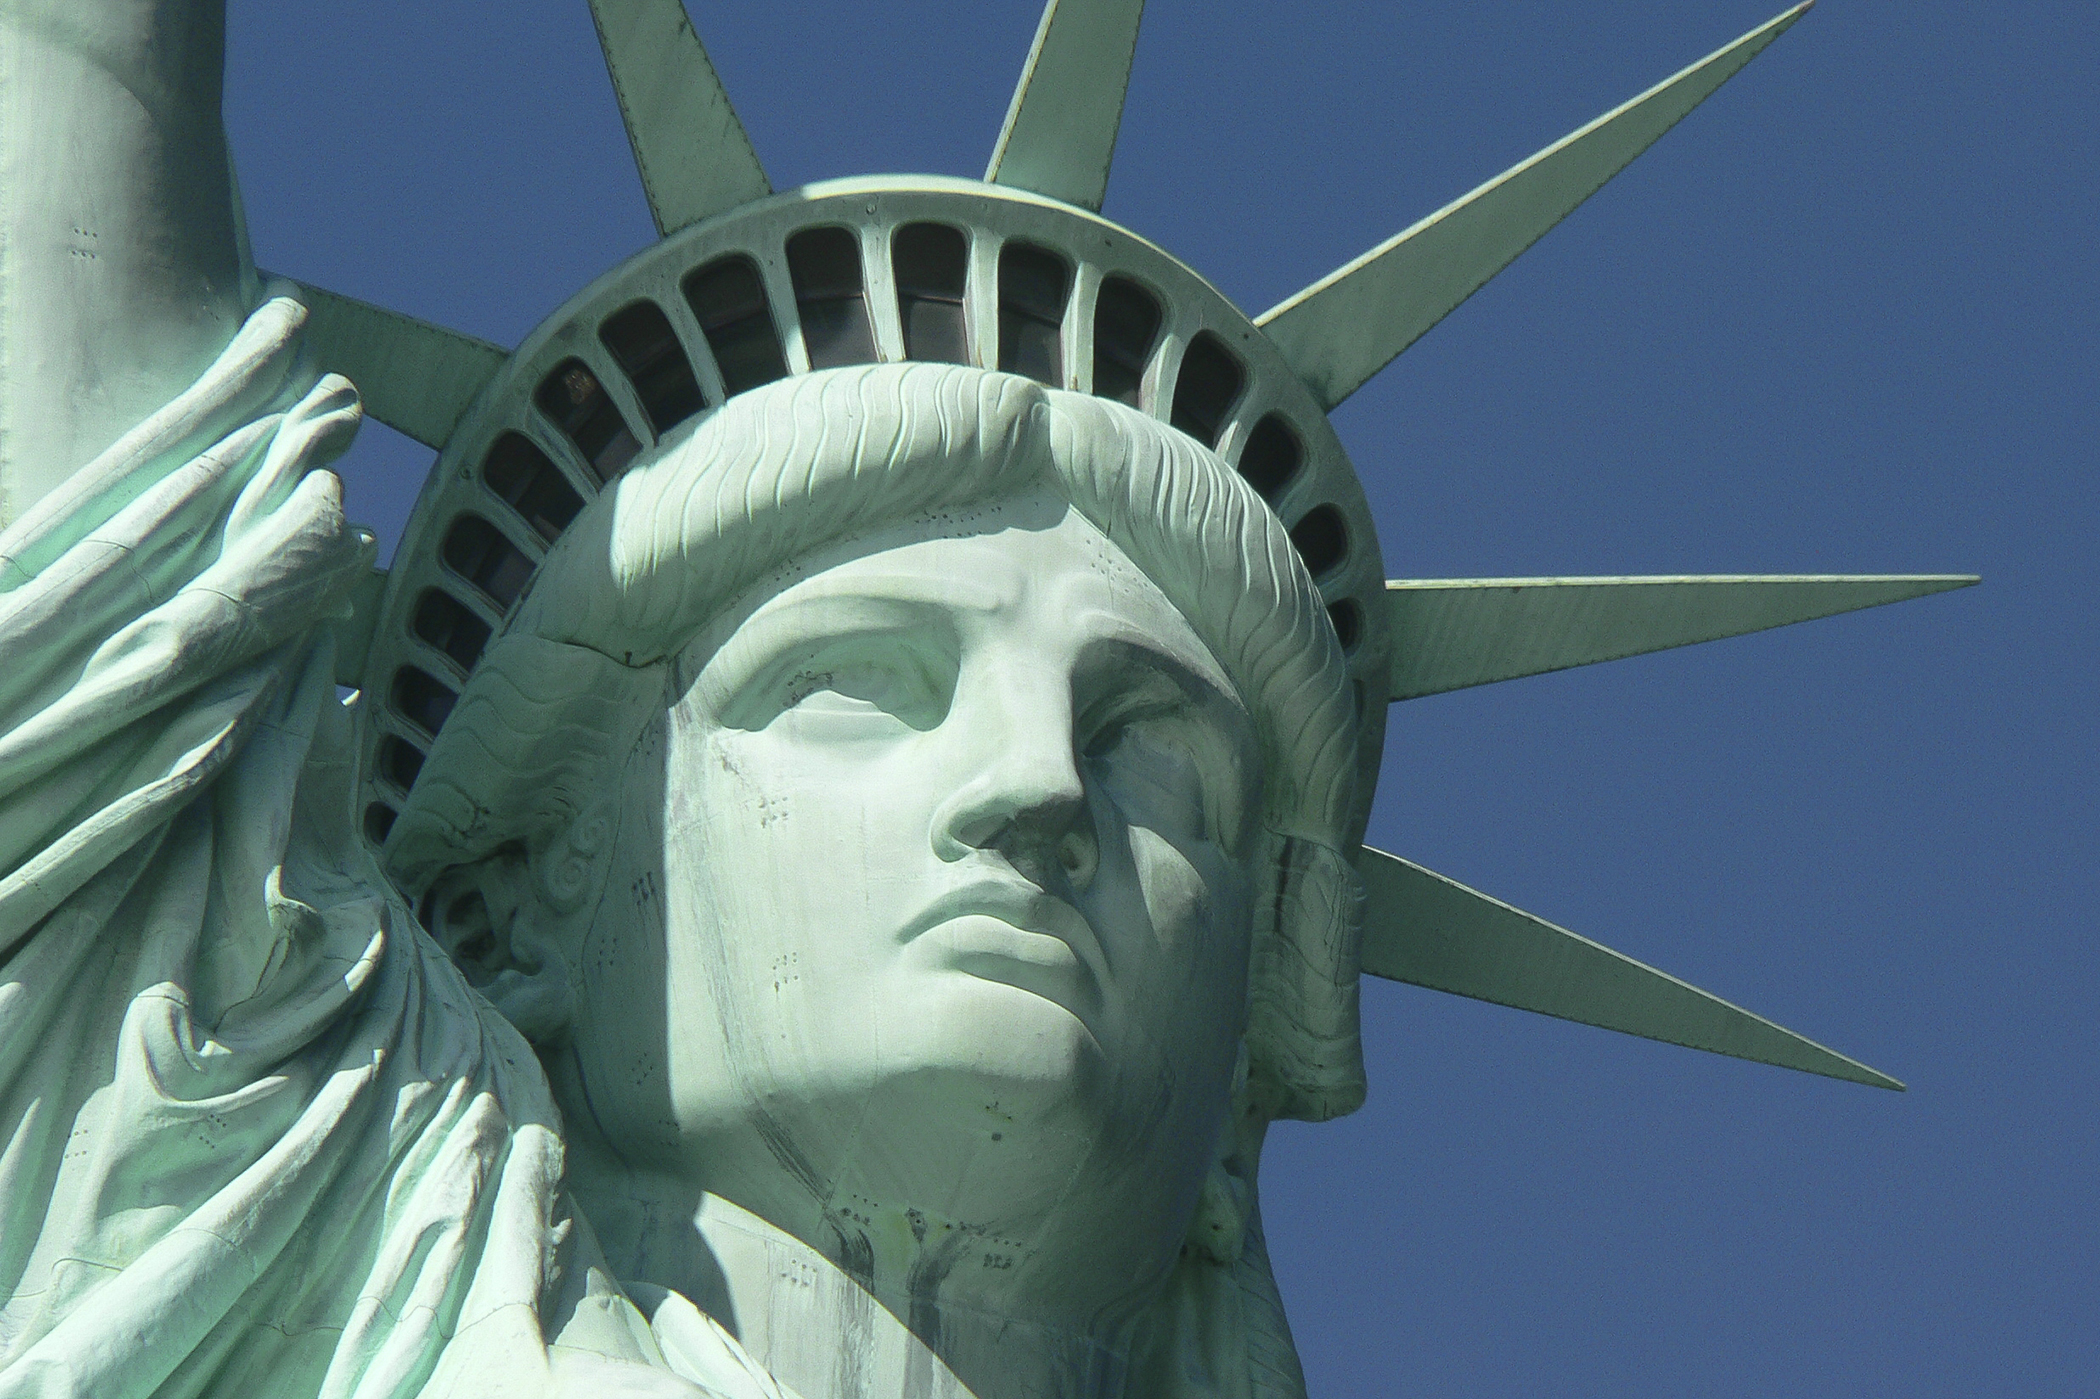 Statue of Liberty, Liberty Island, New York City